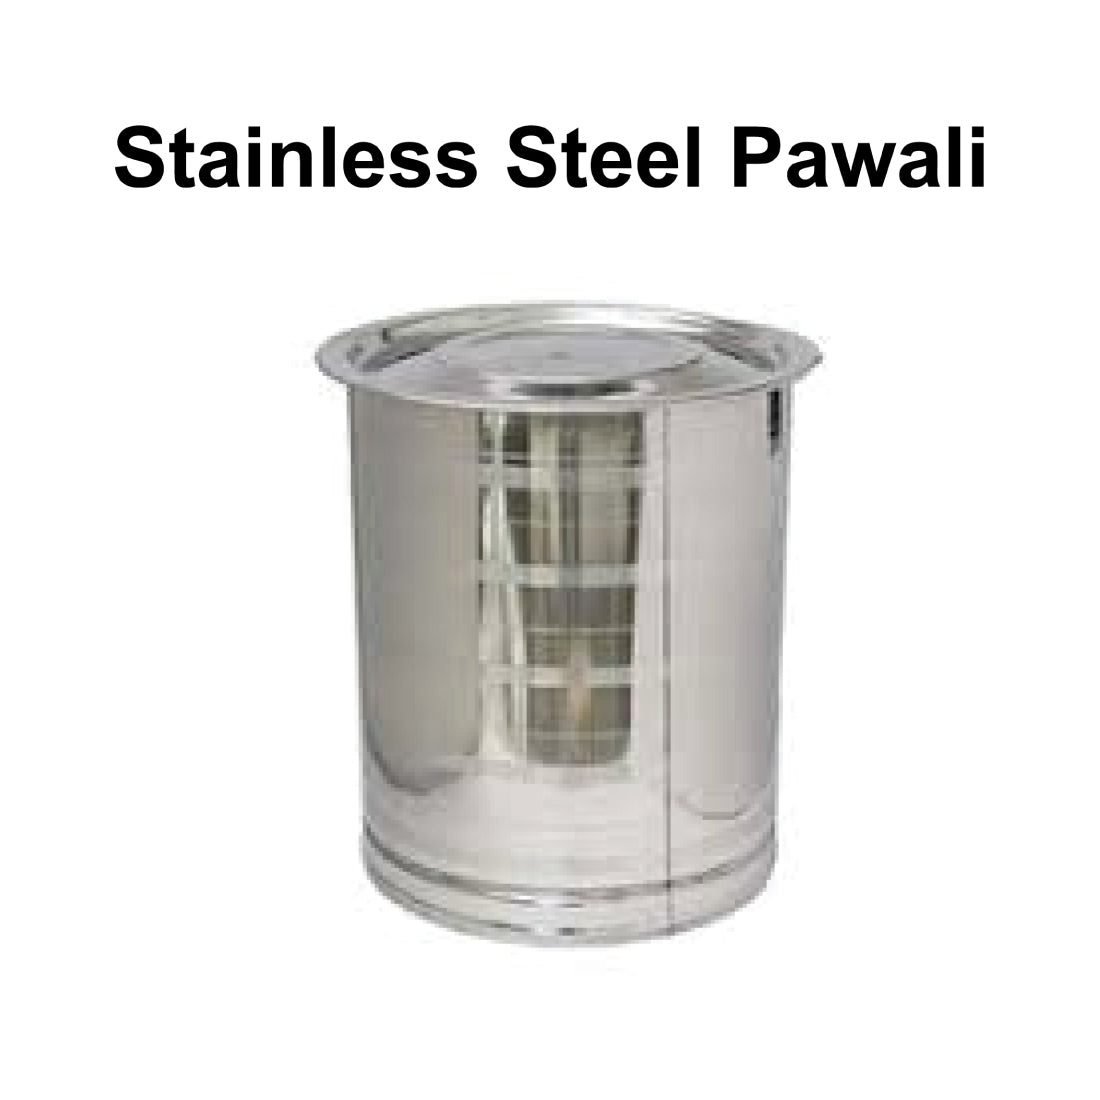 Stainless Steel Pawali